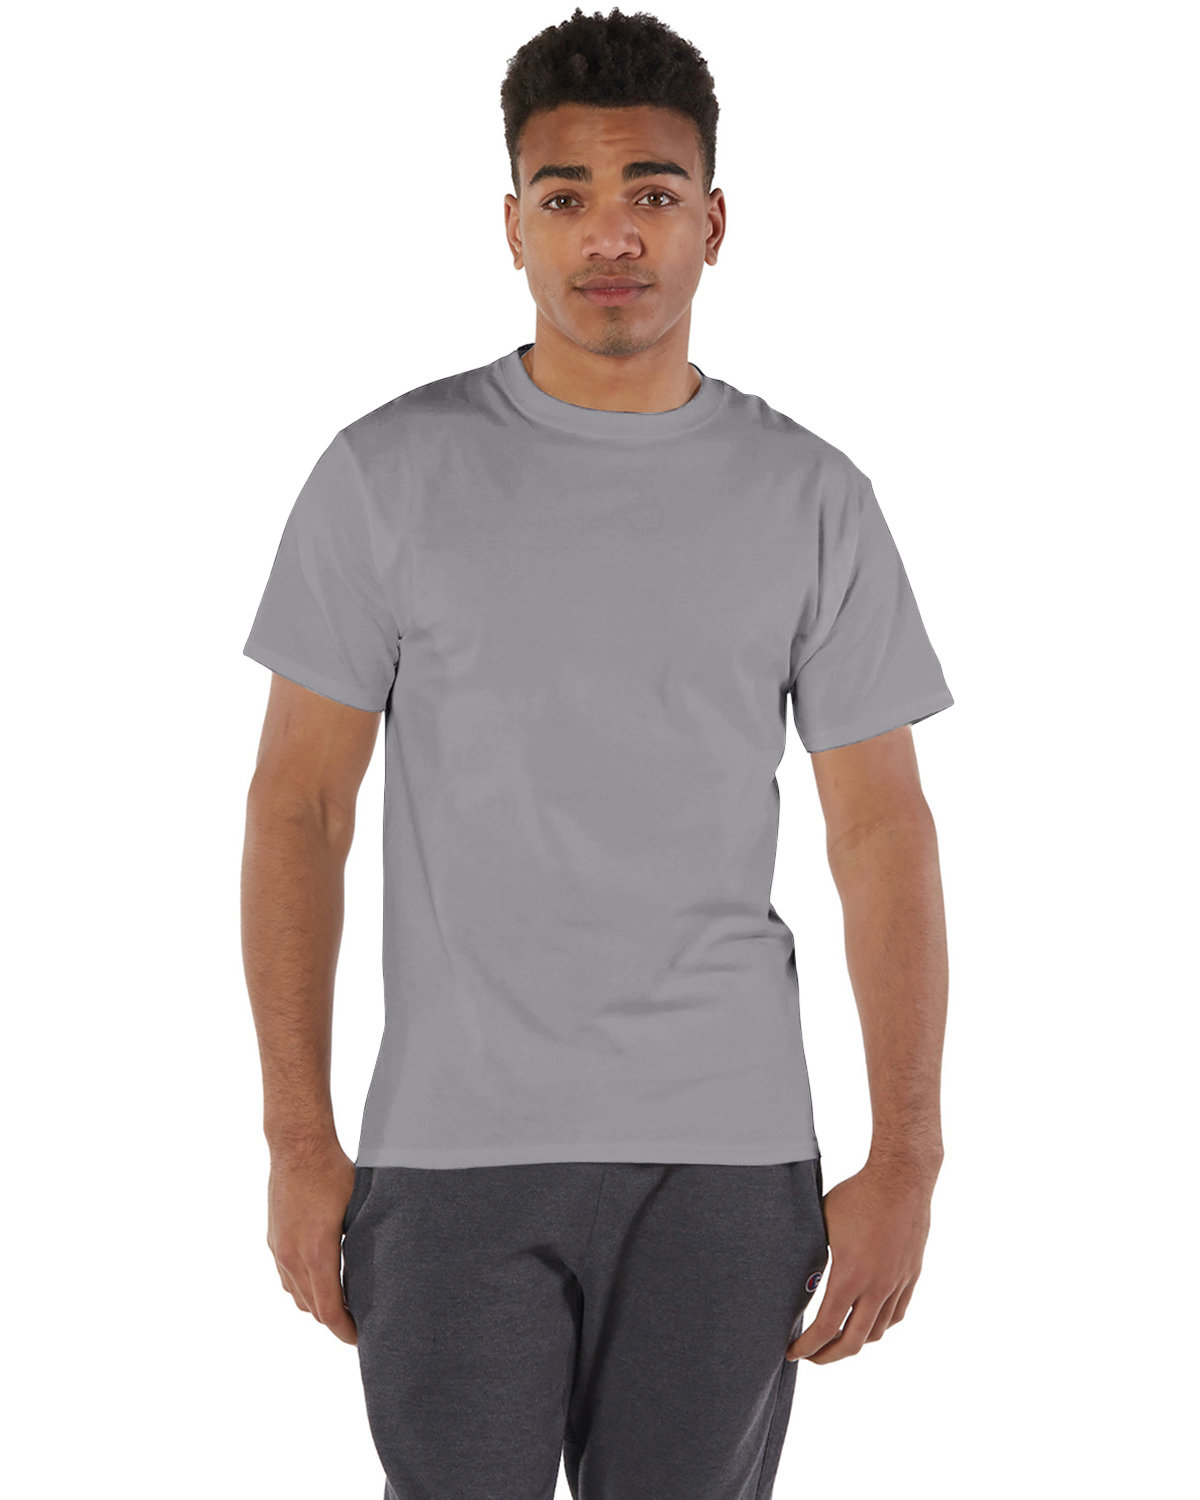 Champion Adult 6 oz. Short-Sleeve T-Shirt STONE GRAY 